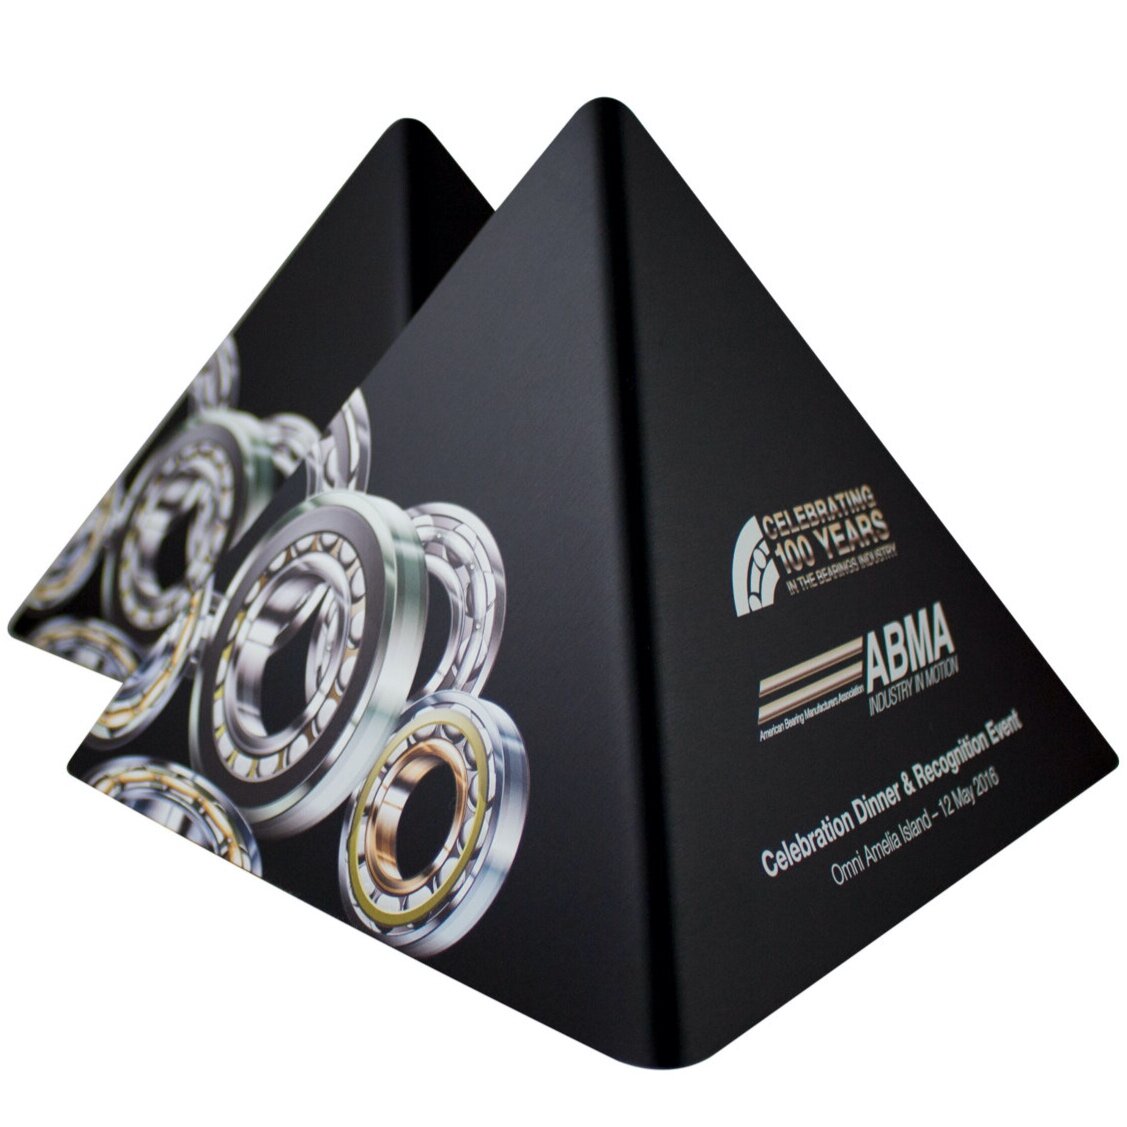 american bearing association custom anniversary awards 